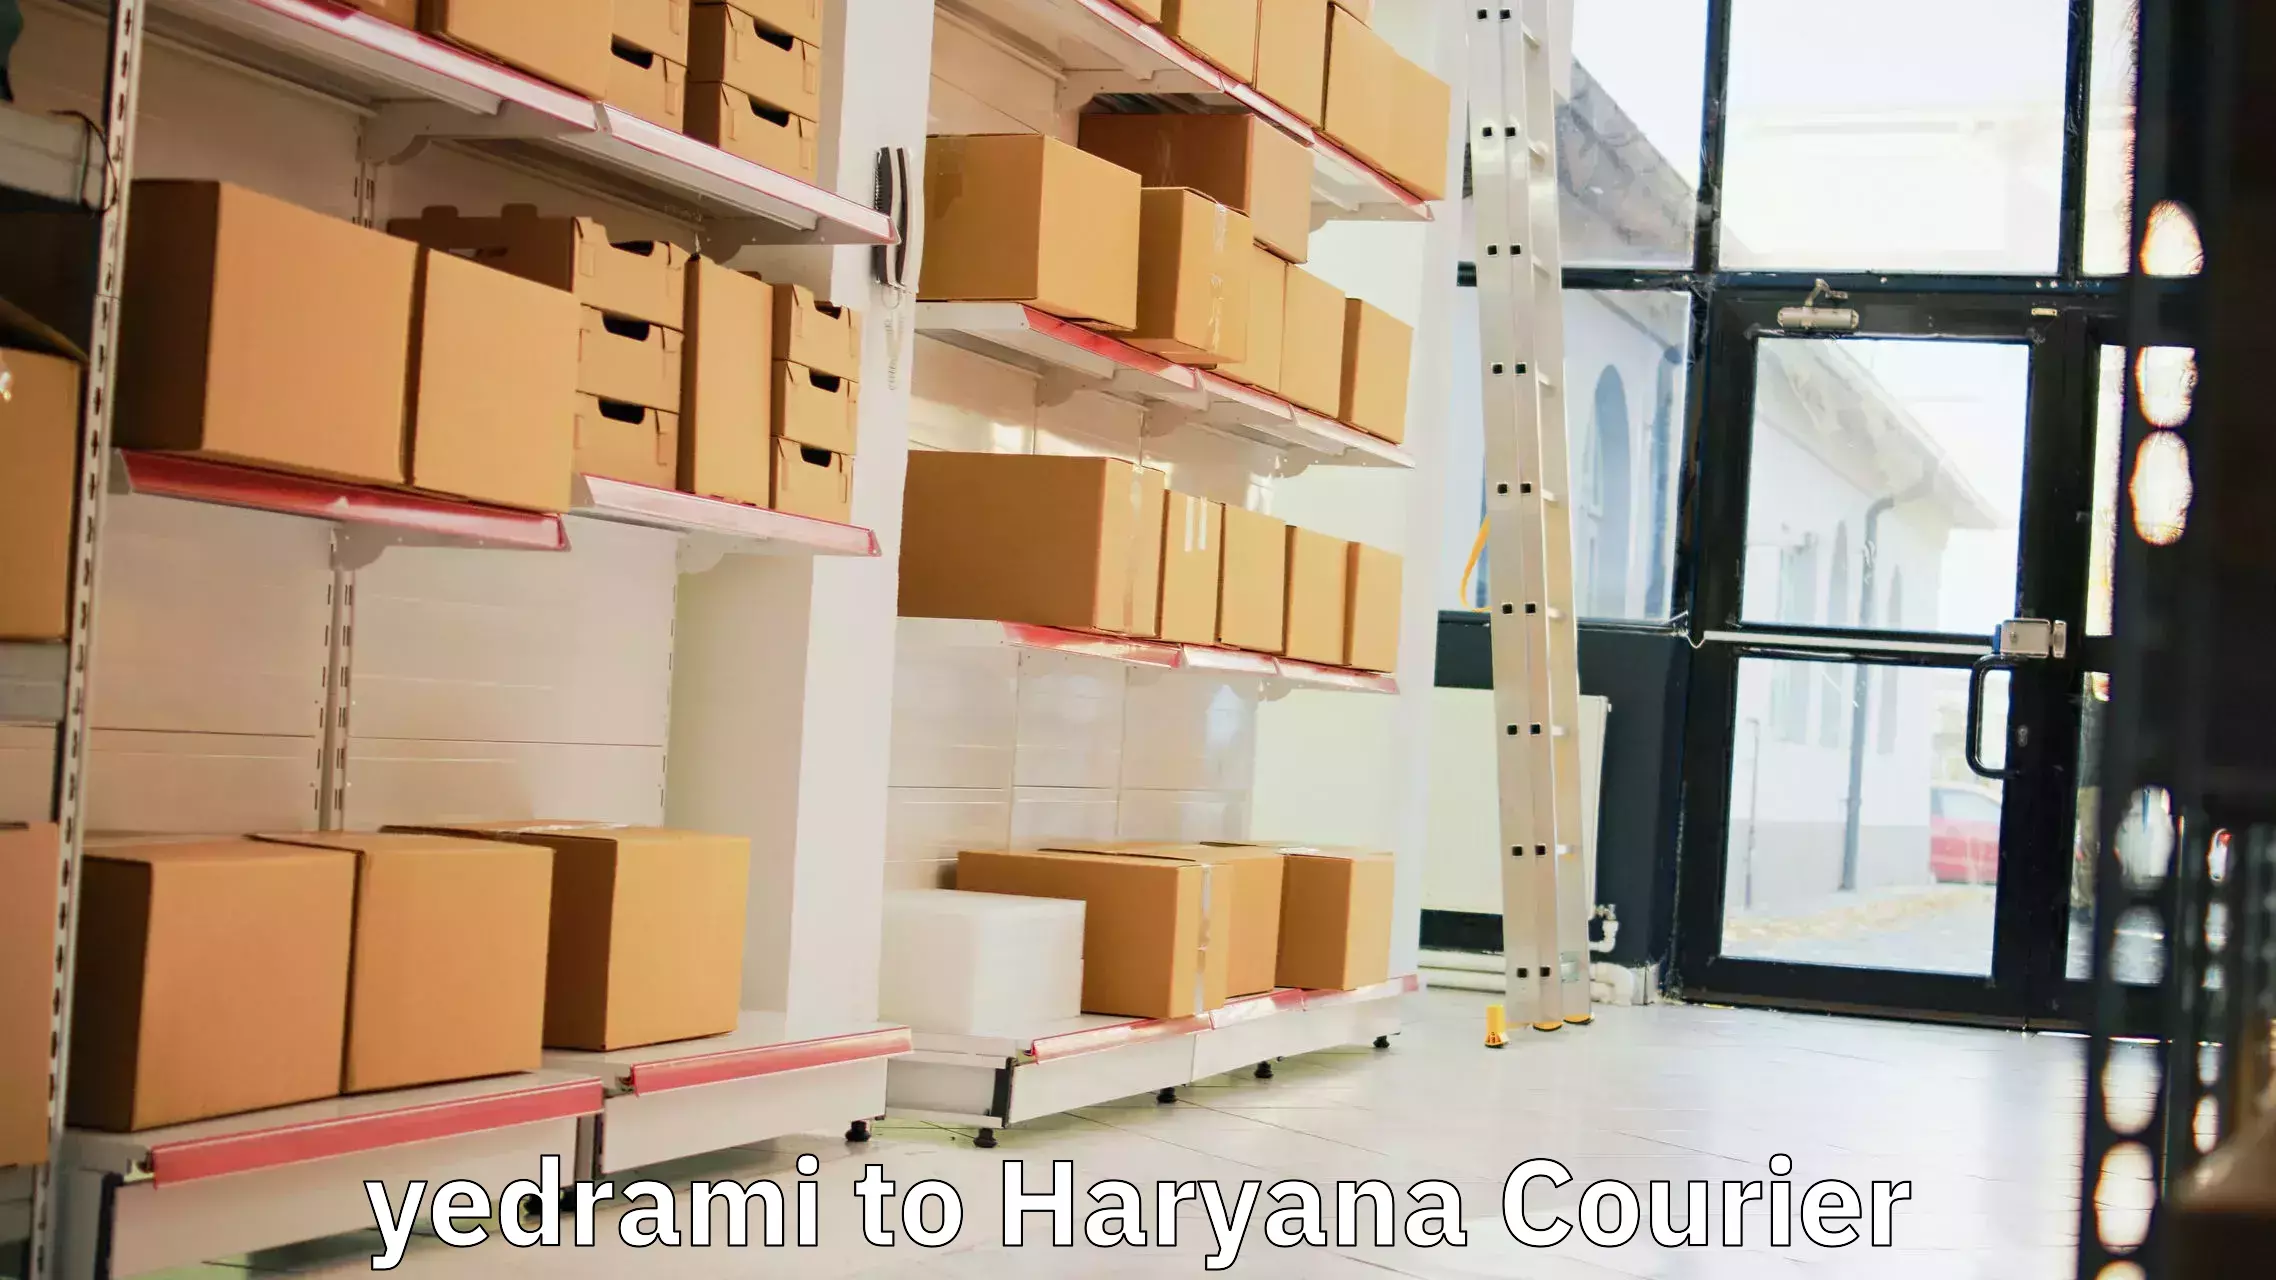 Courier dispatch services in yedrami to Rewari